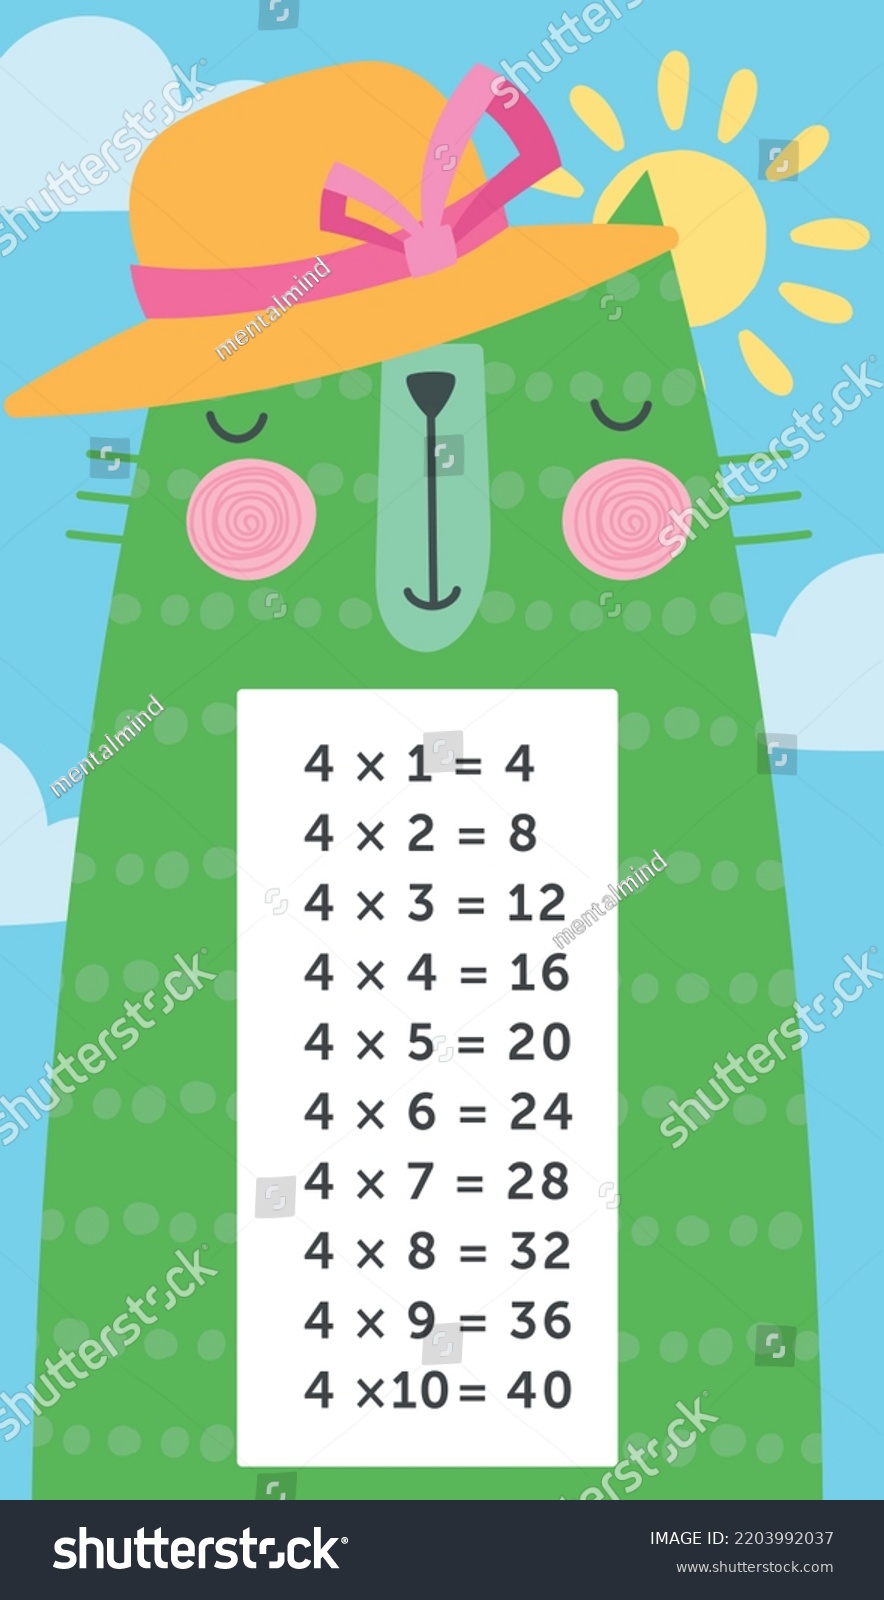 multiplication-table-cat-green-pet-hat-stock-vector-royalty-free-2203992037-shutterstock